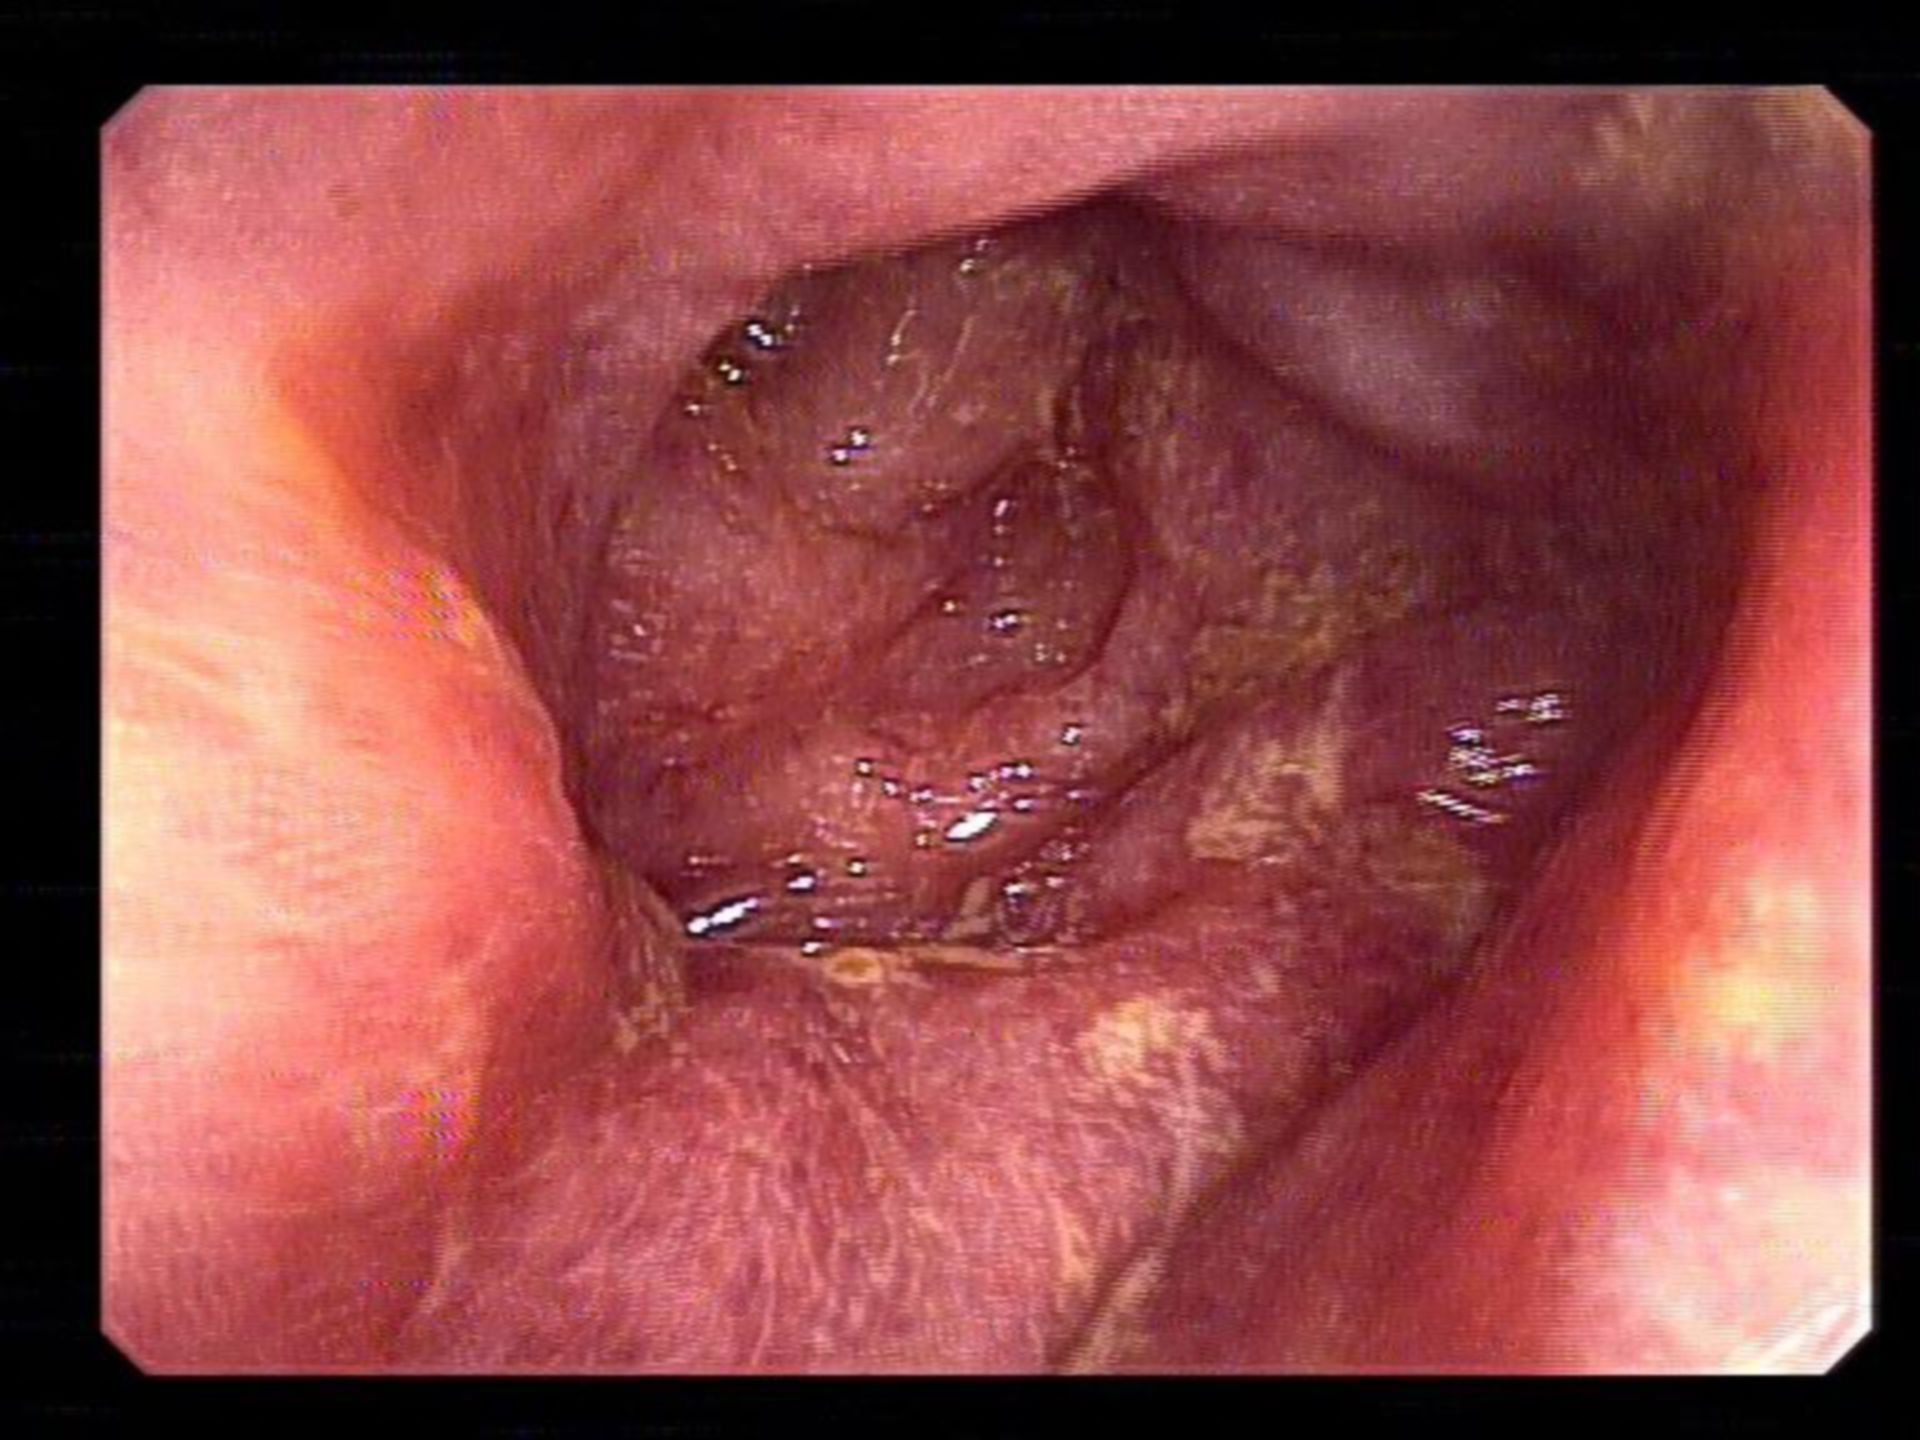 Colitis in EHEC infection